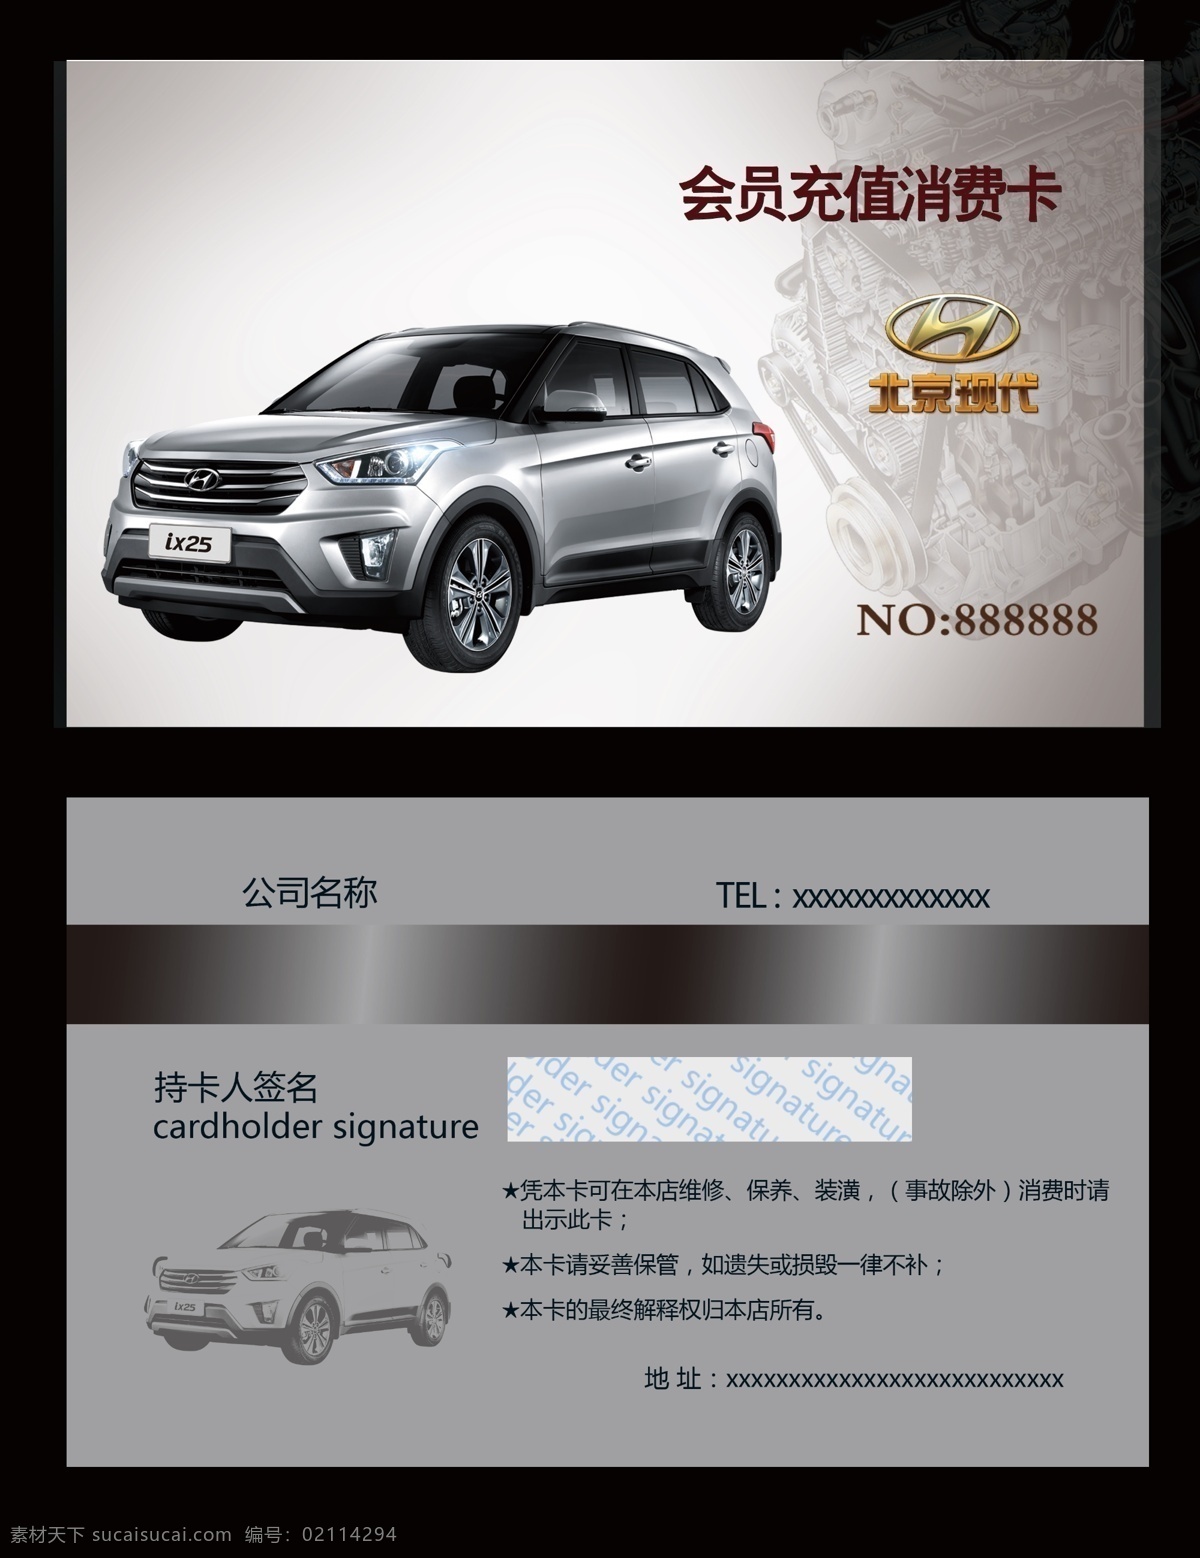 vip 汽车 充值卡 北京 现代 ix25 卡 名片卡片